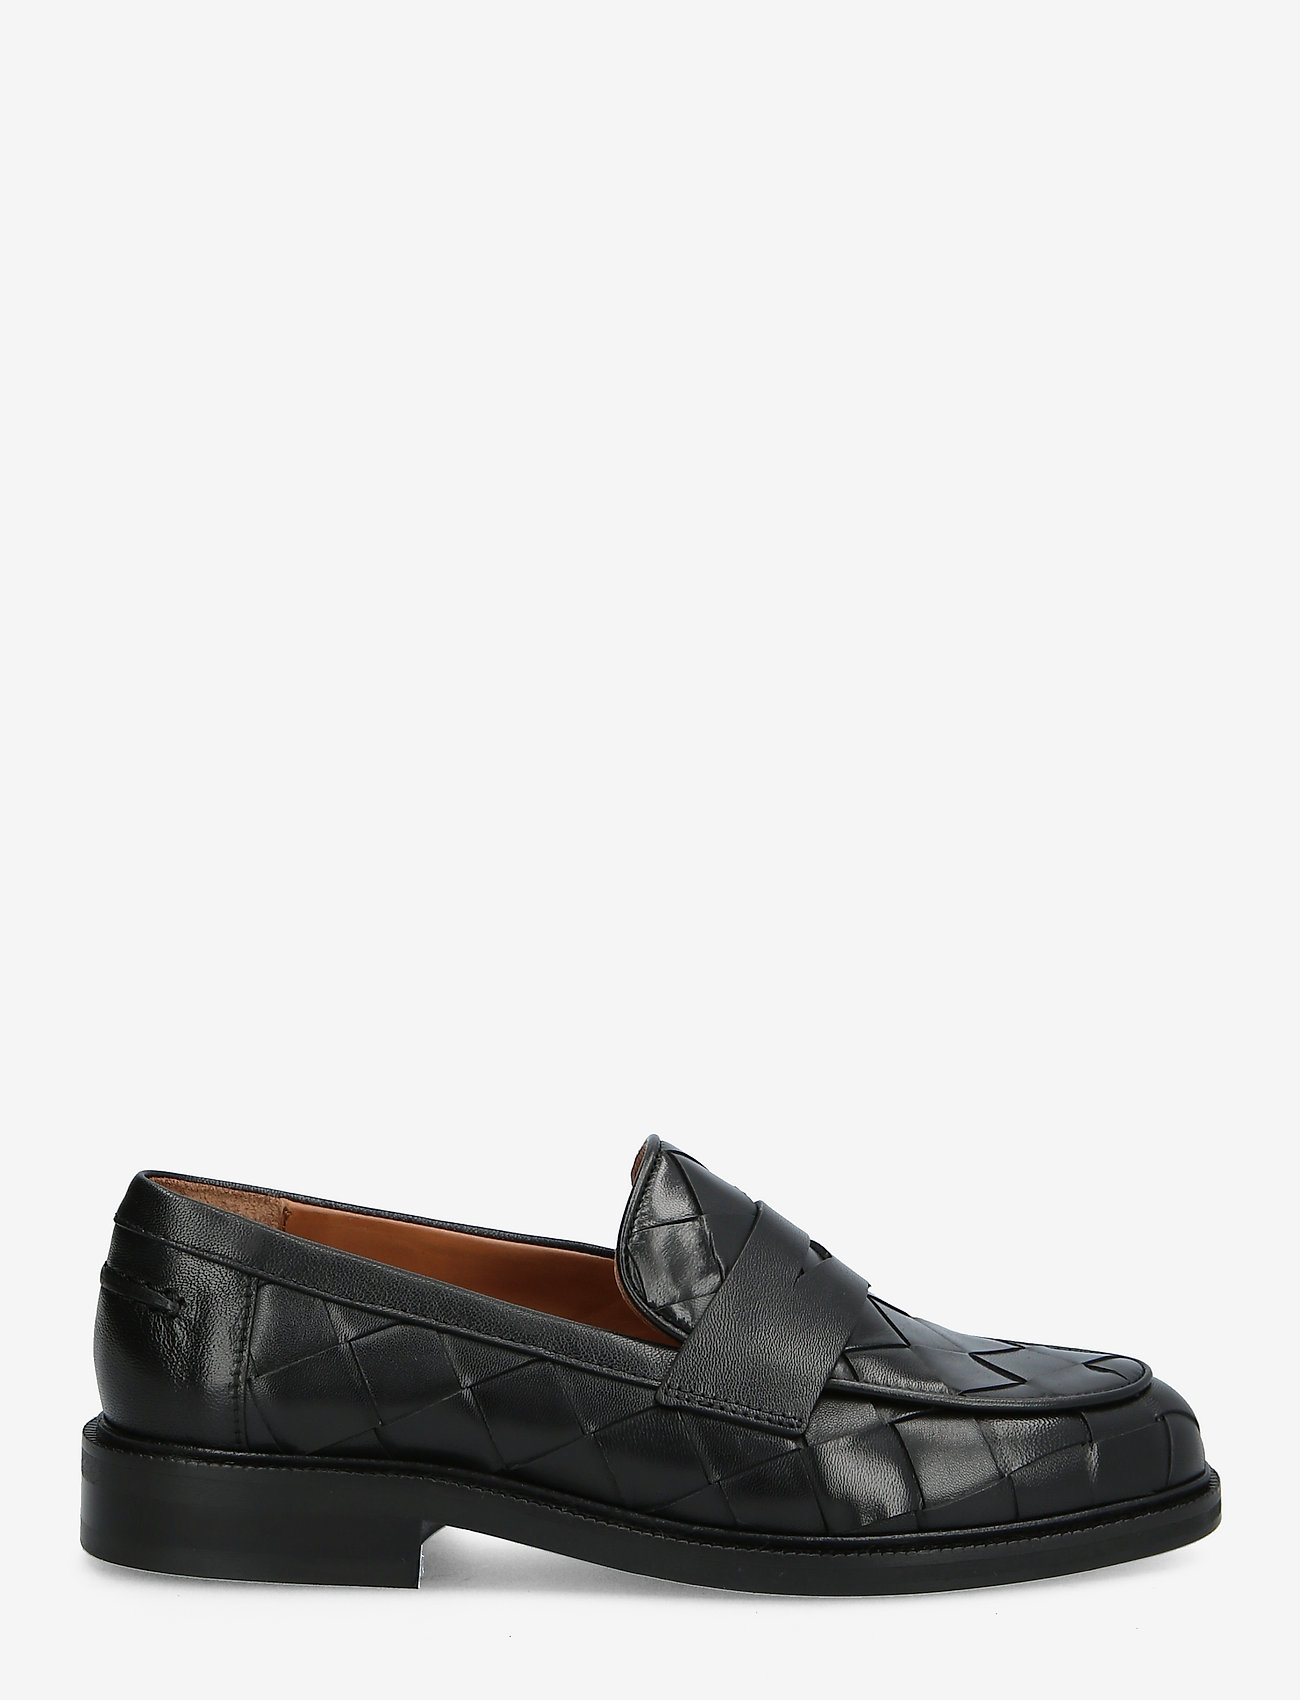 Billi Bi - Shoes - nordic style - black calf 80 - 1